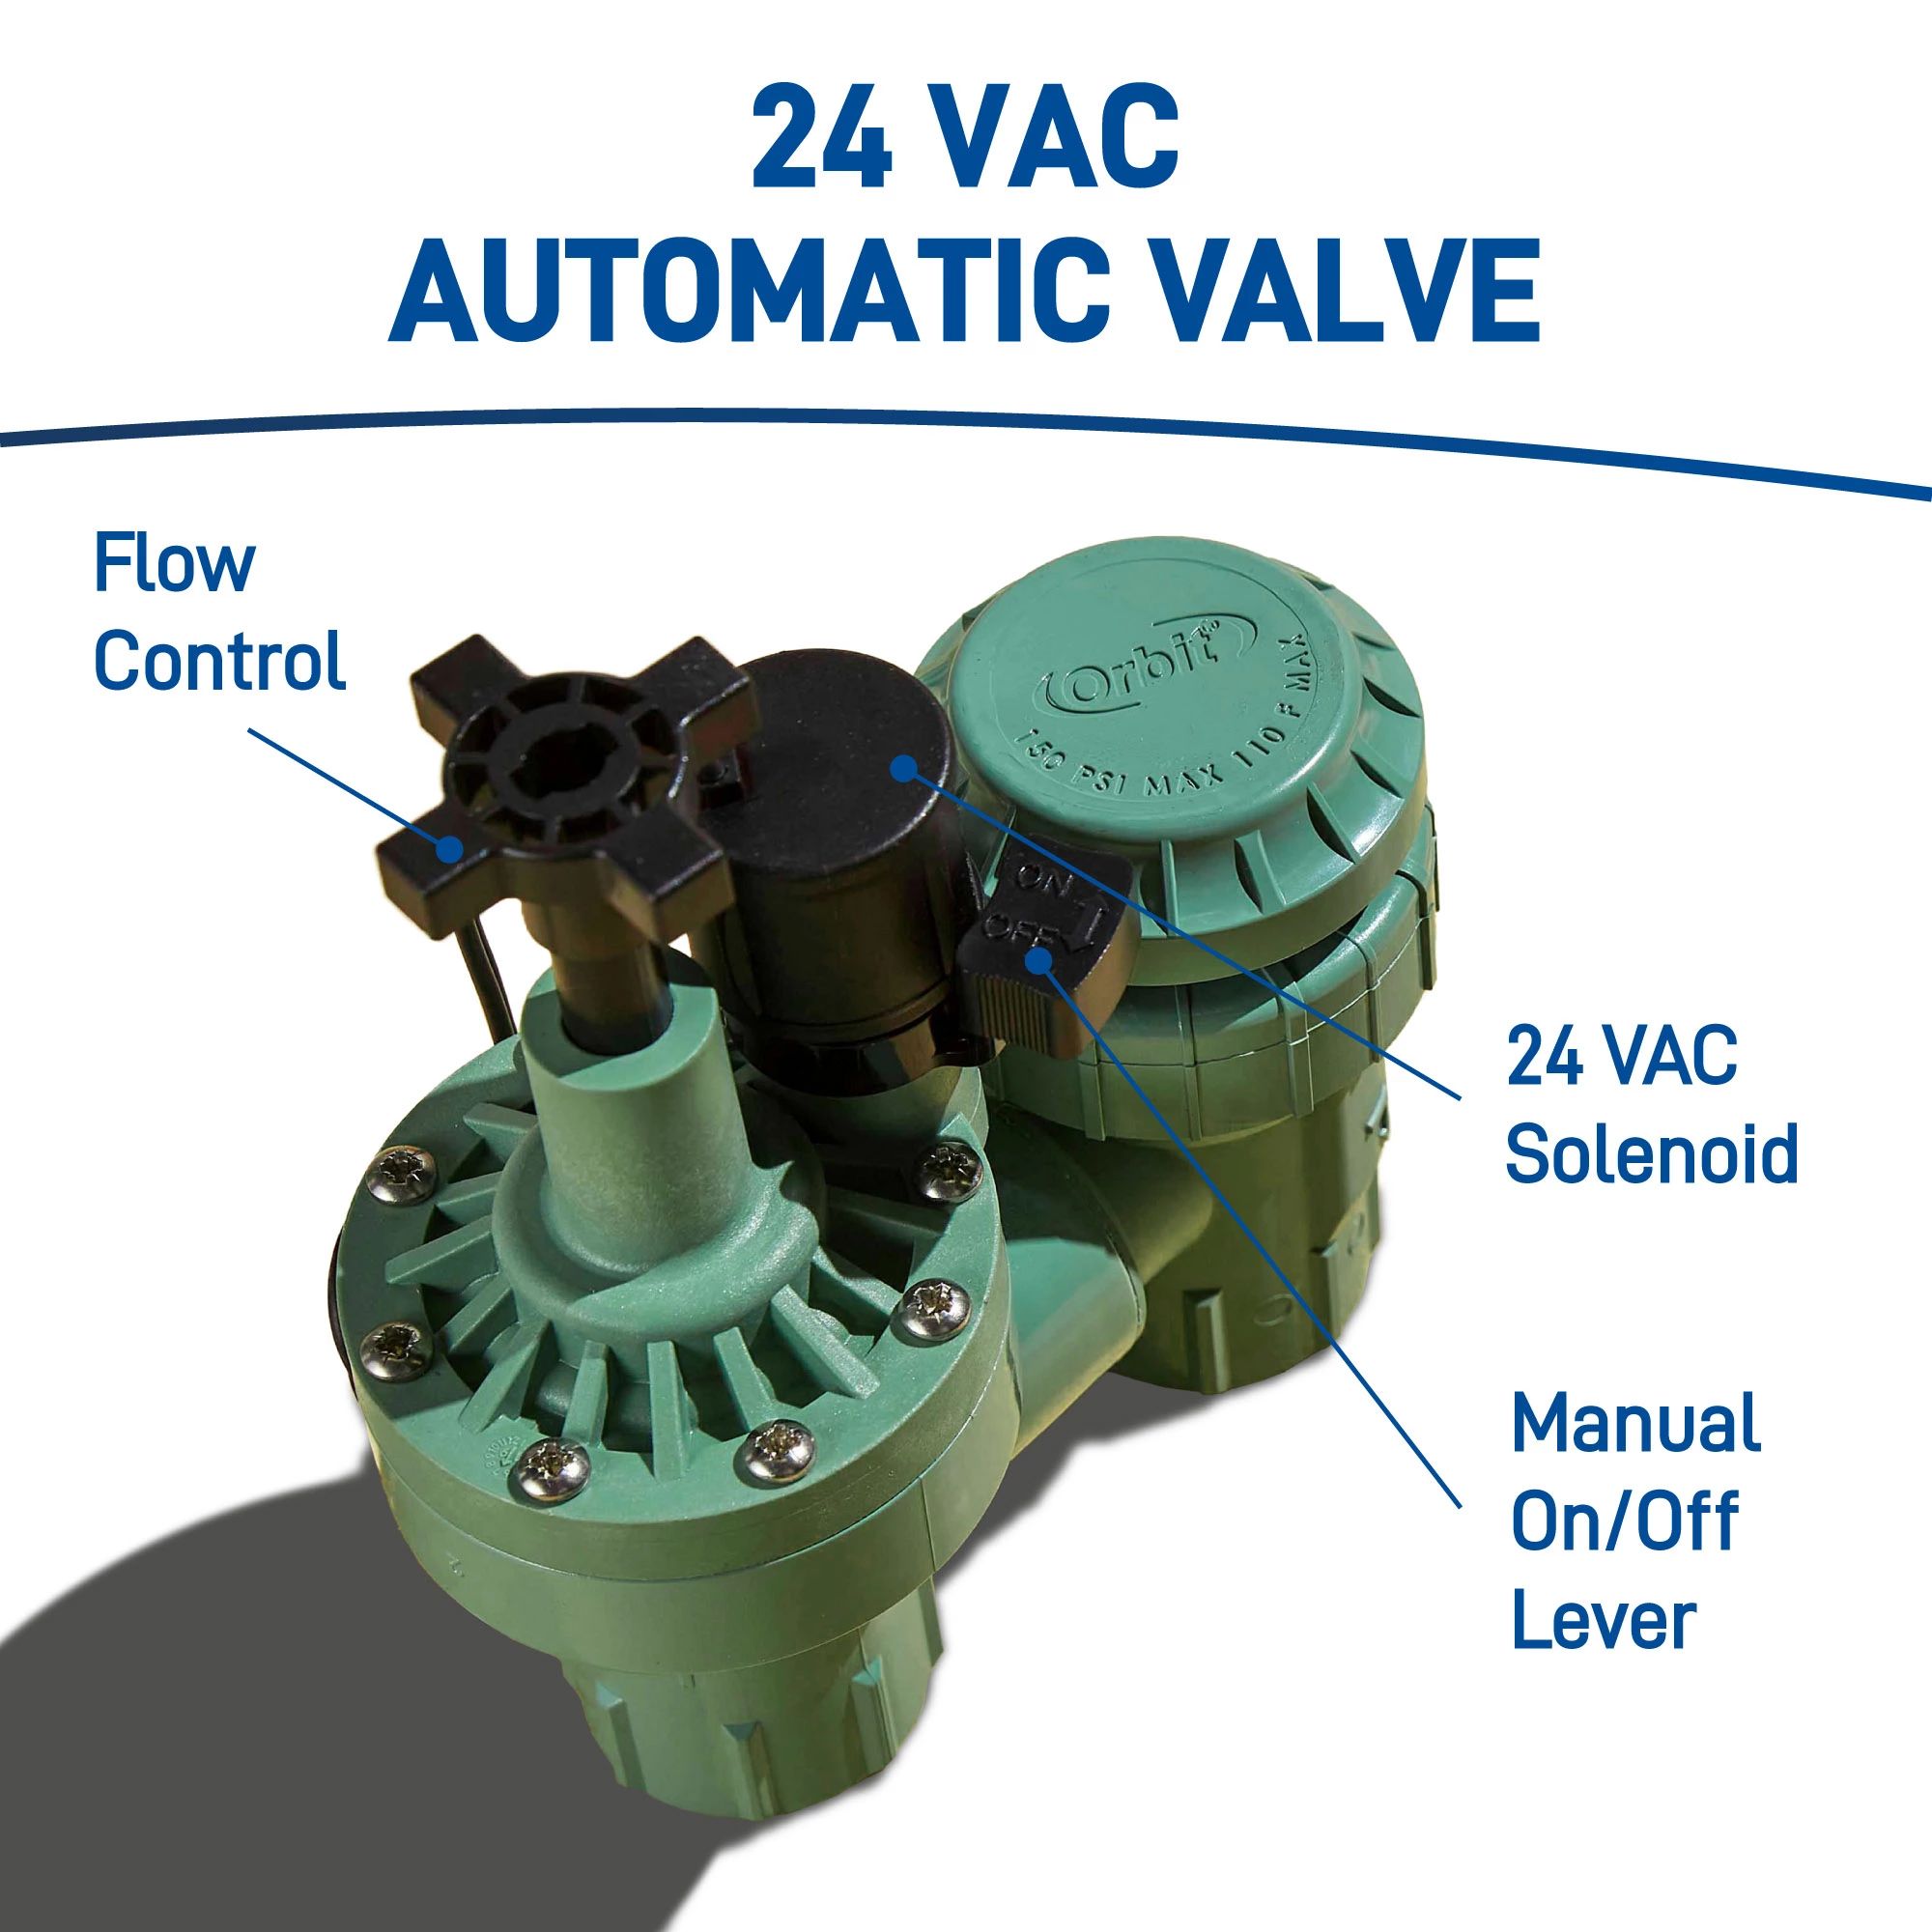 Anti-siphon valve repairable? : r/Irrigation